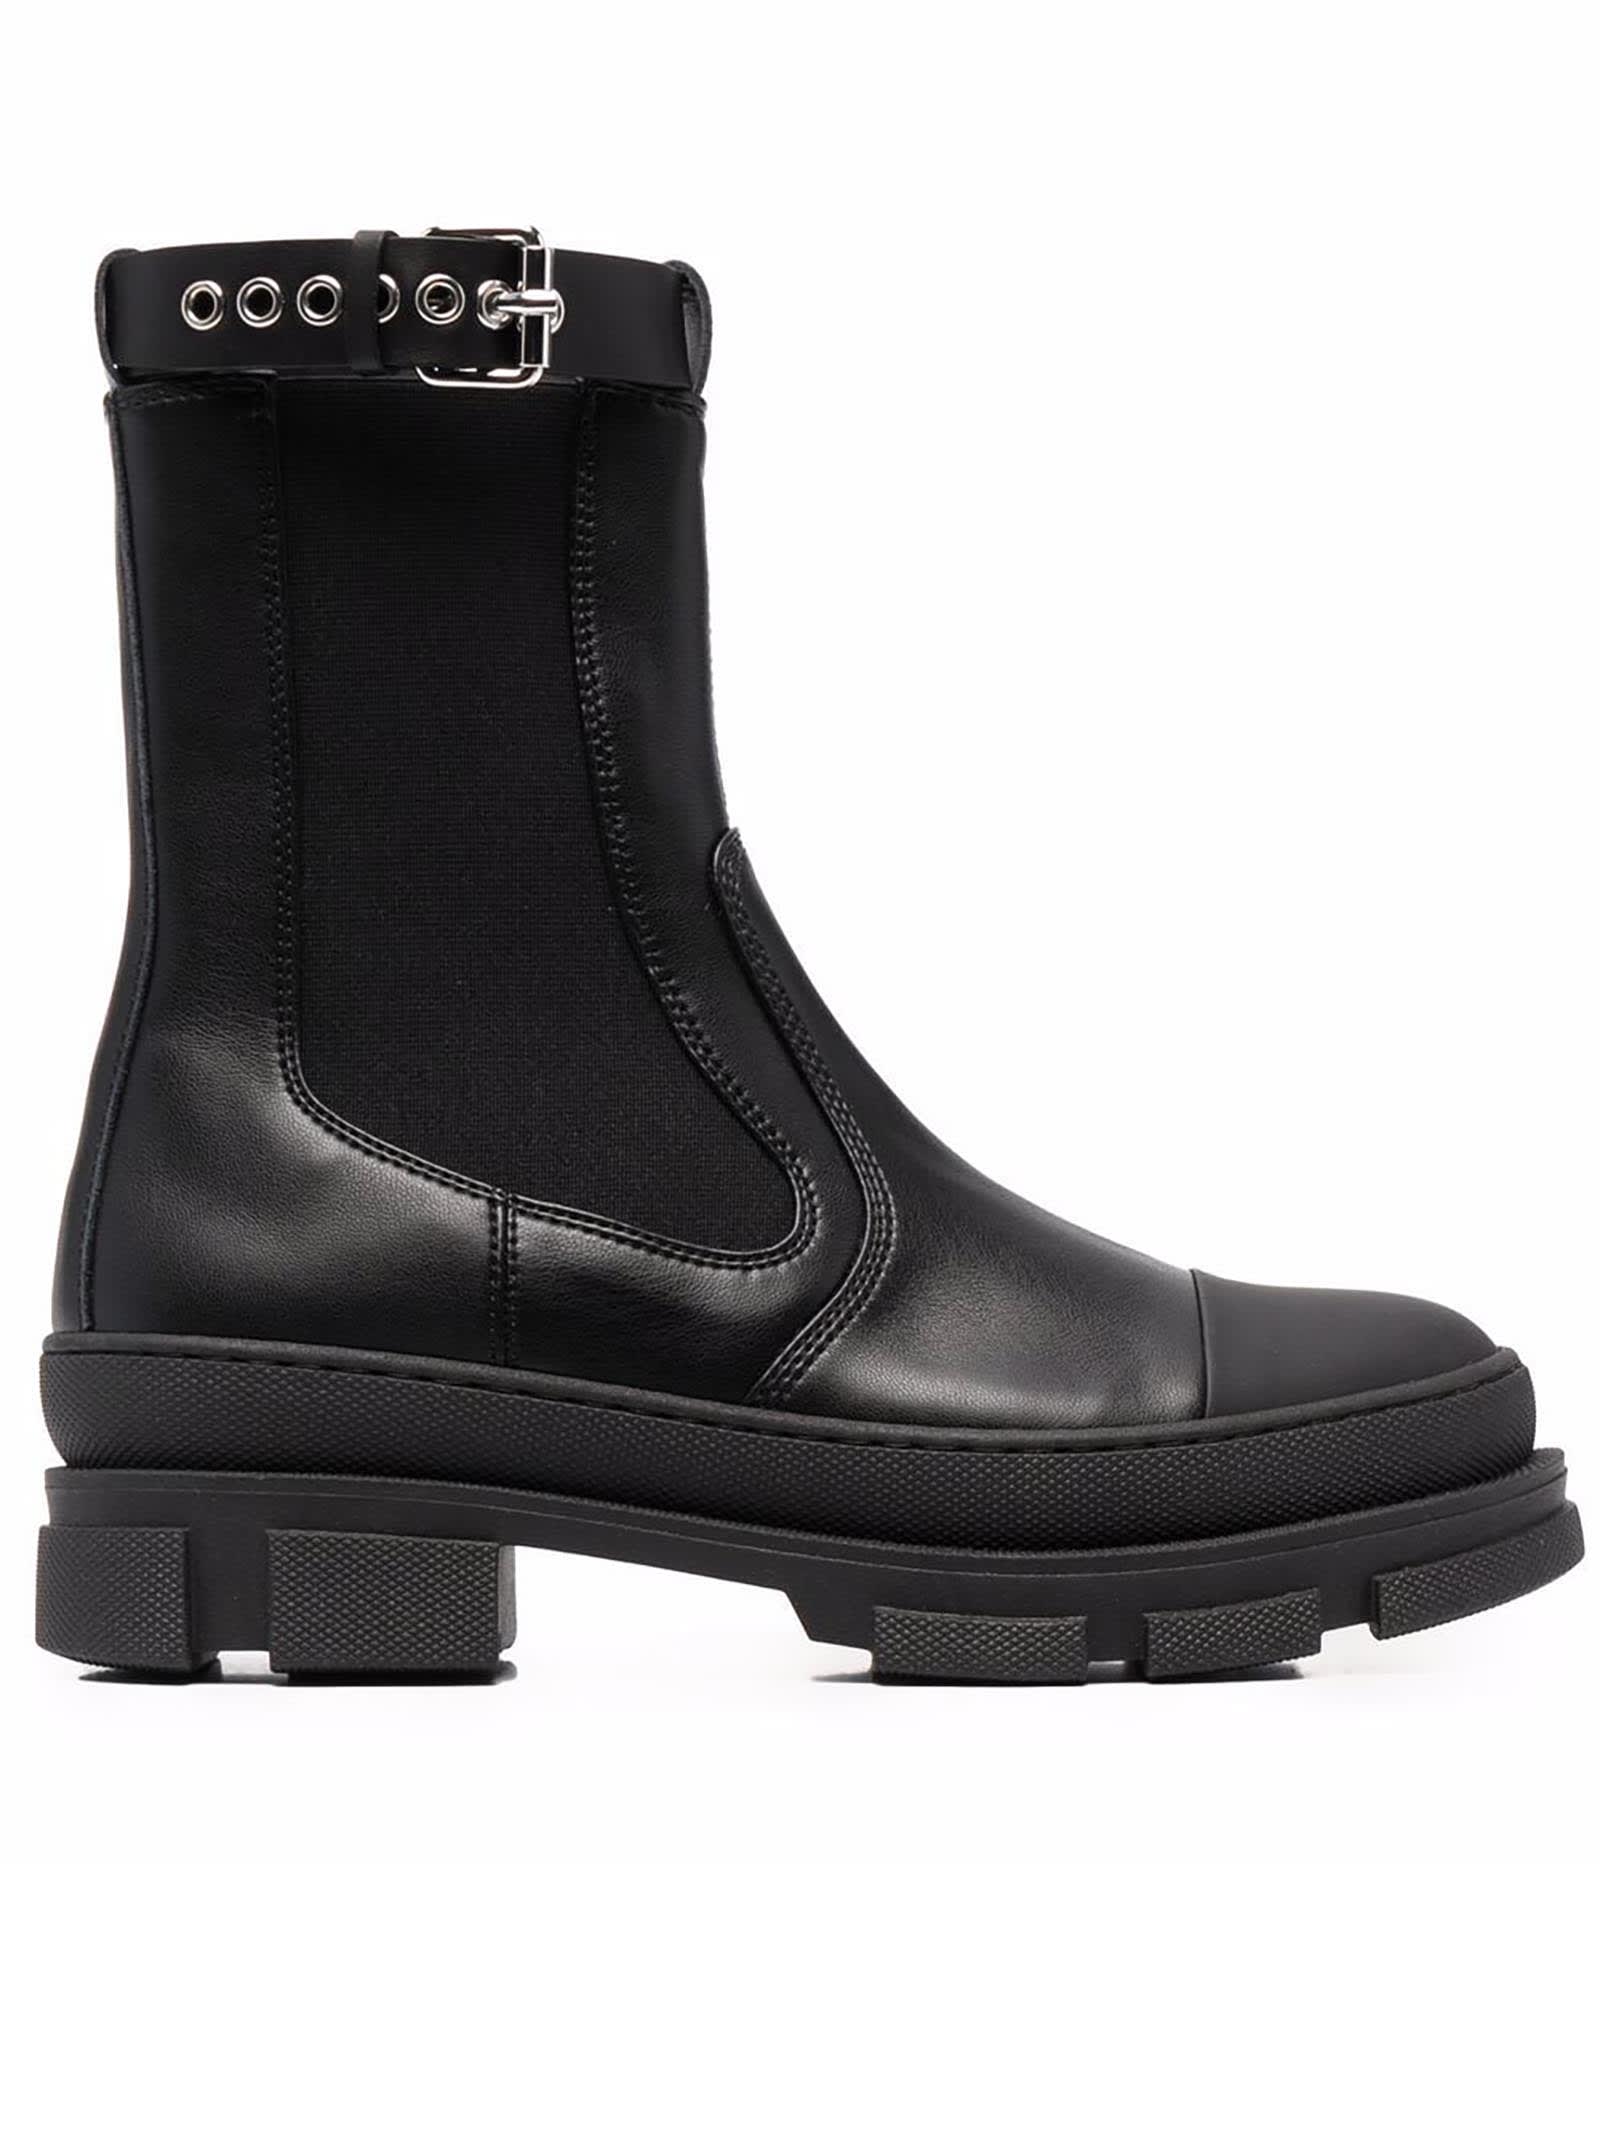 Philosophy di Lorenzo Serafini Black Leather Ankle Boots